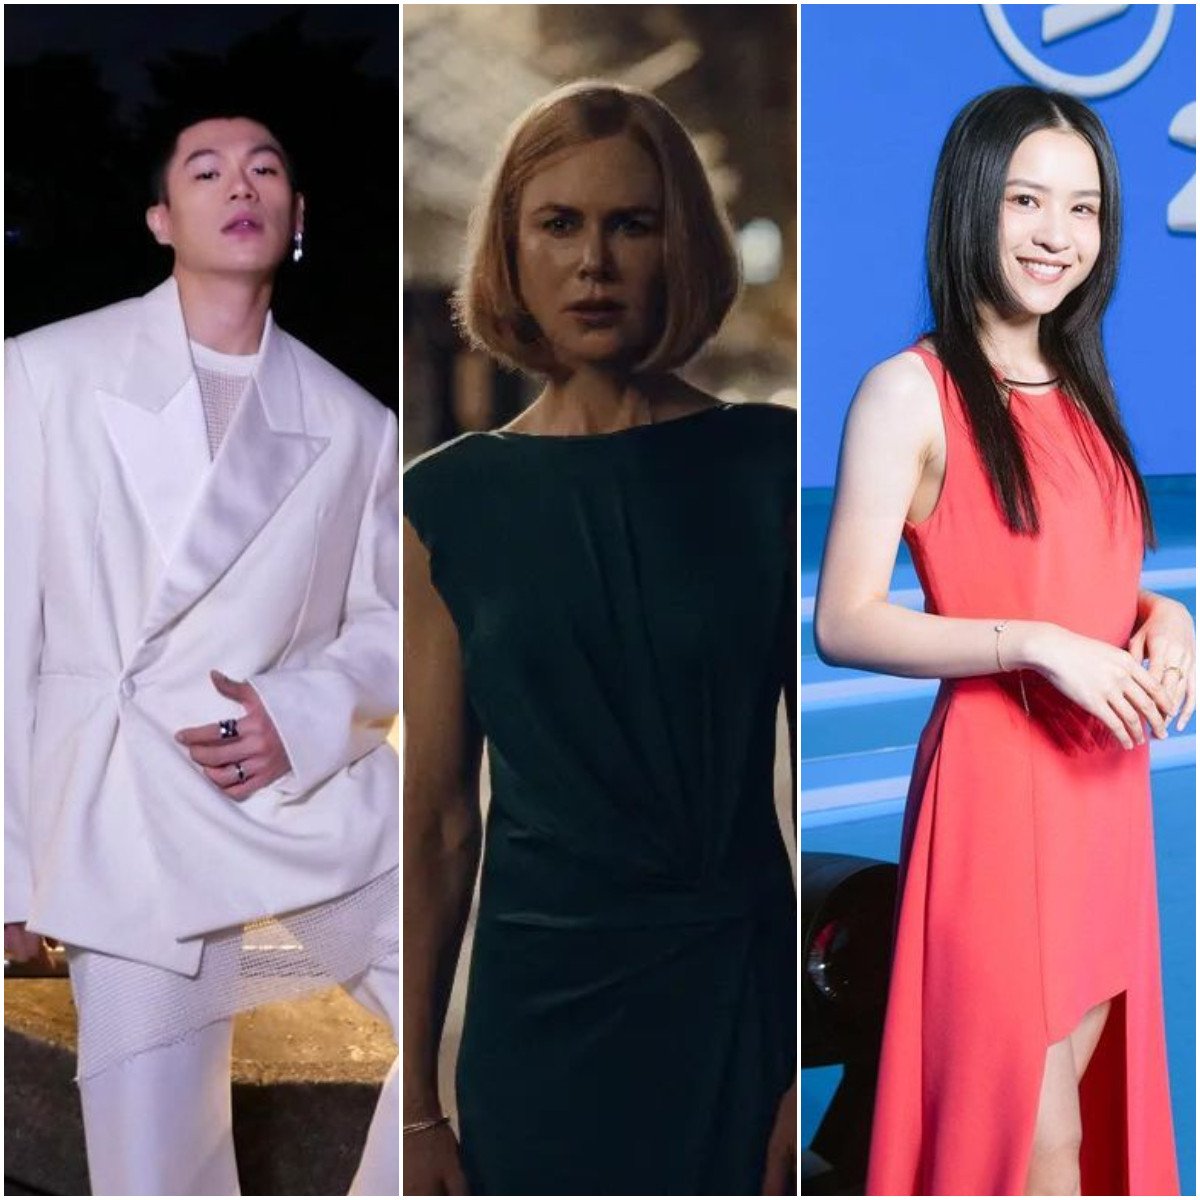 The Expats stars Nicole Kidman (centre) as well as Hong Kong actors such as Will Or and Bonde Sham. Photos: @willallwailam, @reasonkidman, @lokyi_mui/Instagram